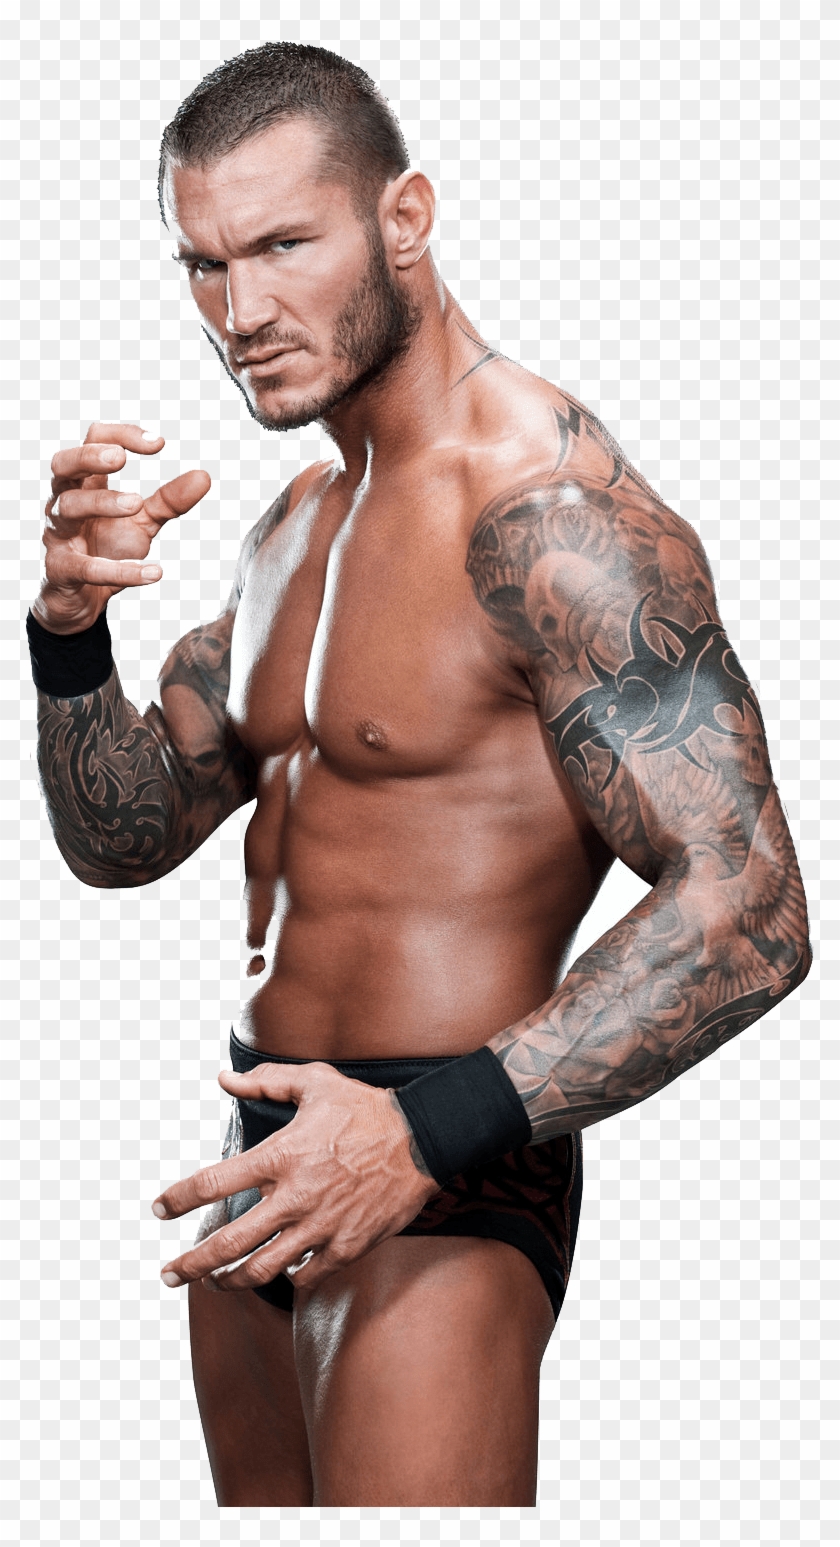 Celebrities - Randy Orton Wrestler Clipart #133853